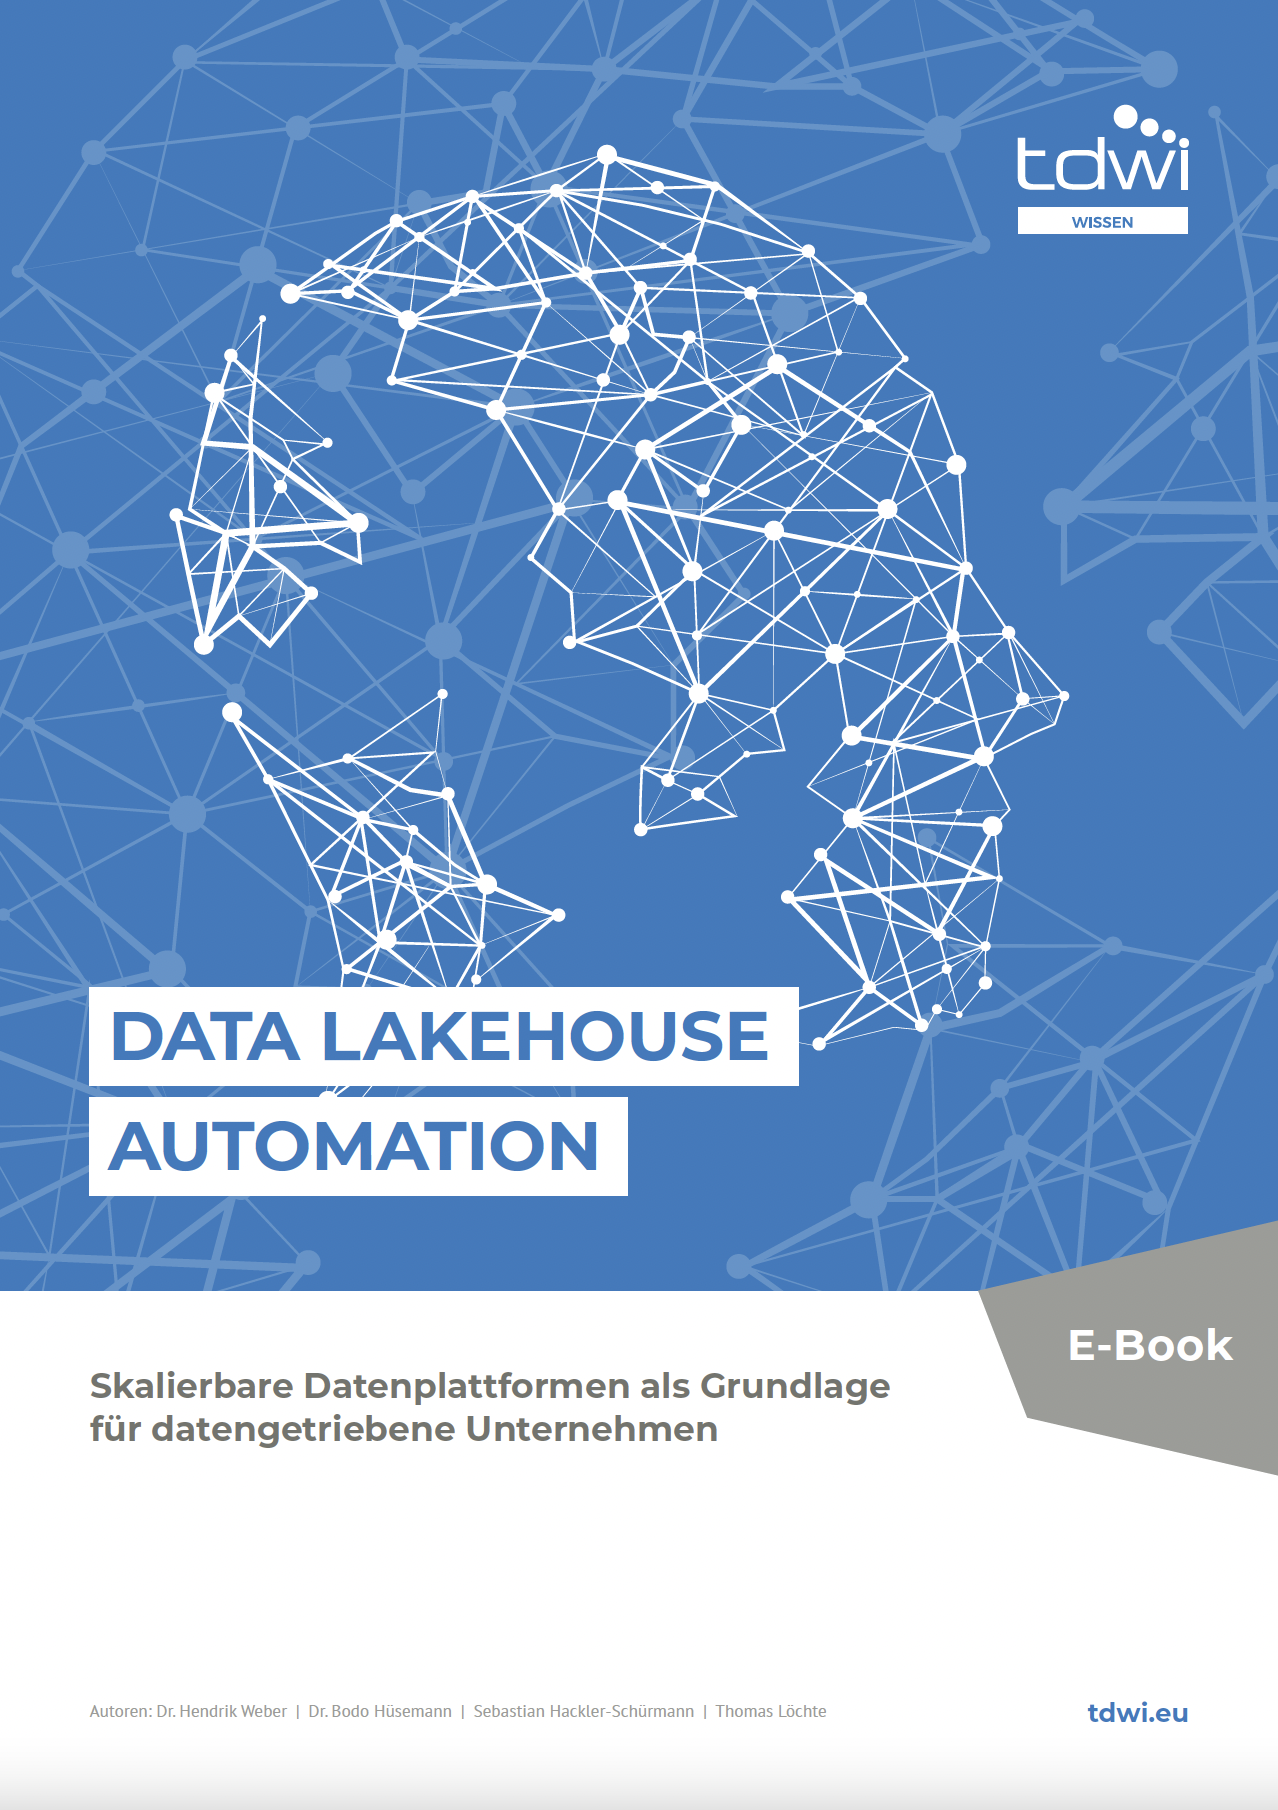 TDWI E-Book Data Lakouse Automation , Five1